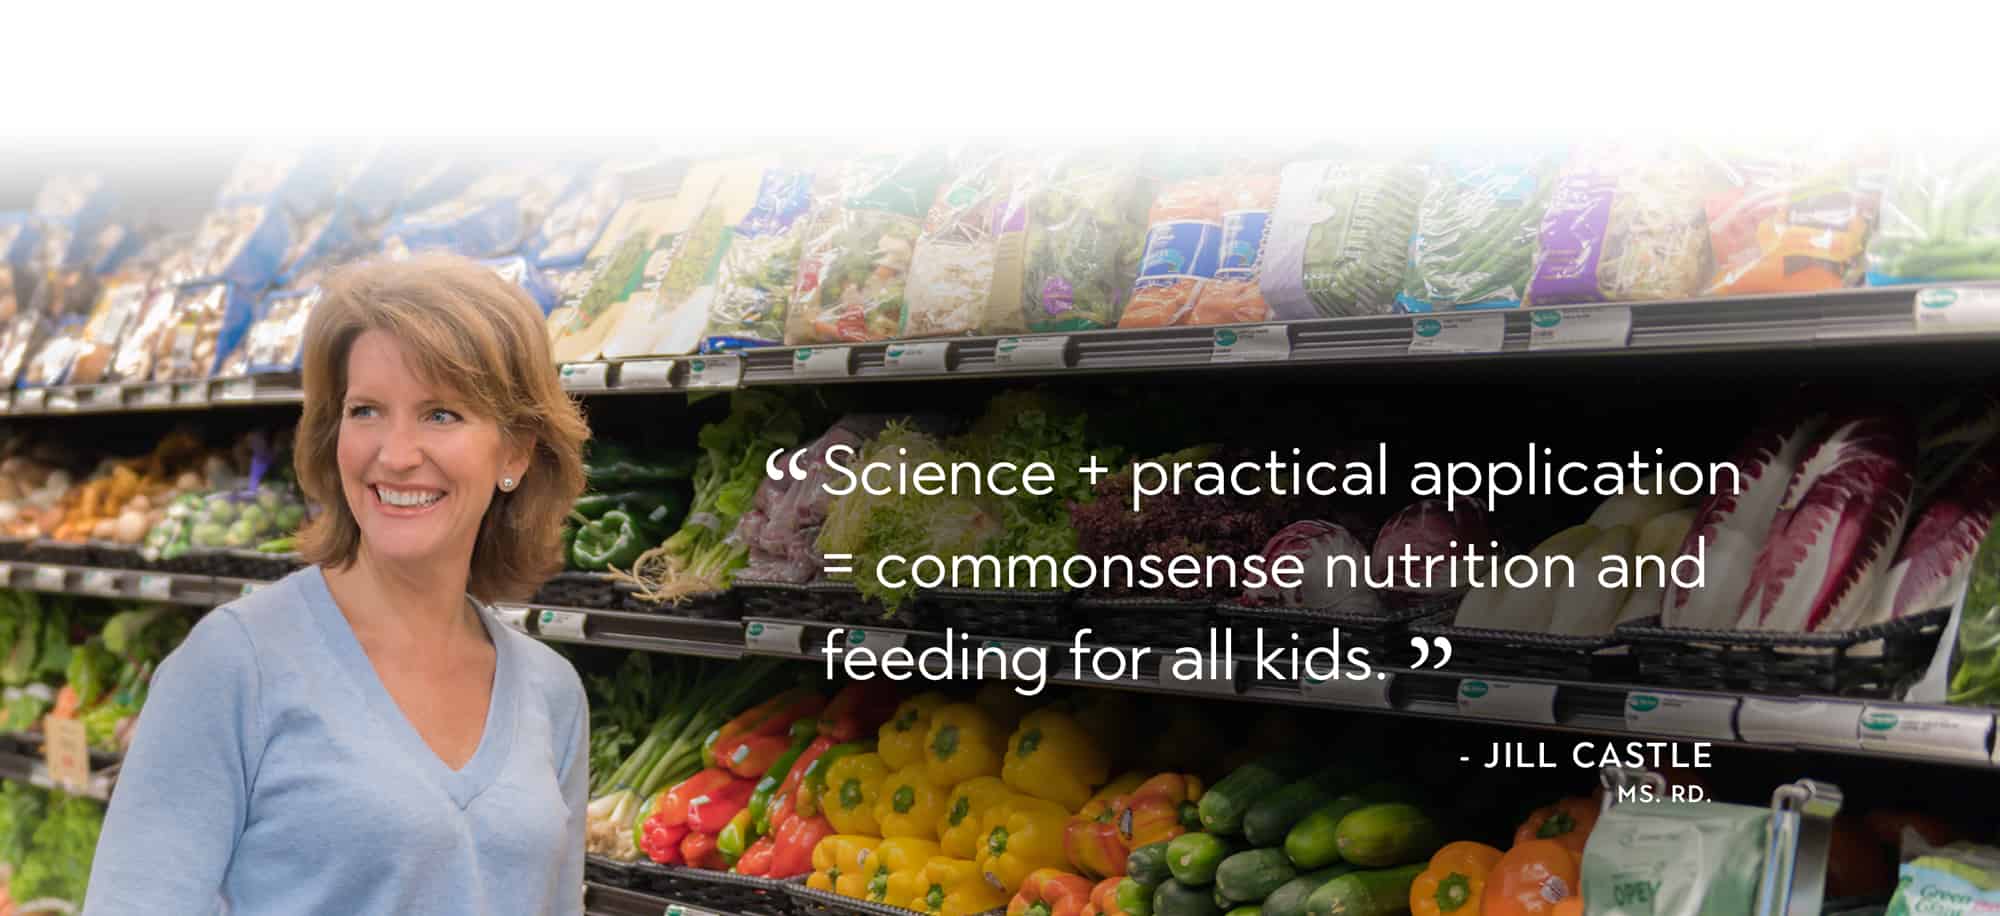 Jill Castle, MS, RDN - pediatric nutrition expert for the media